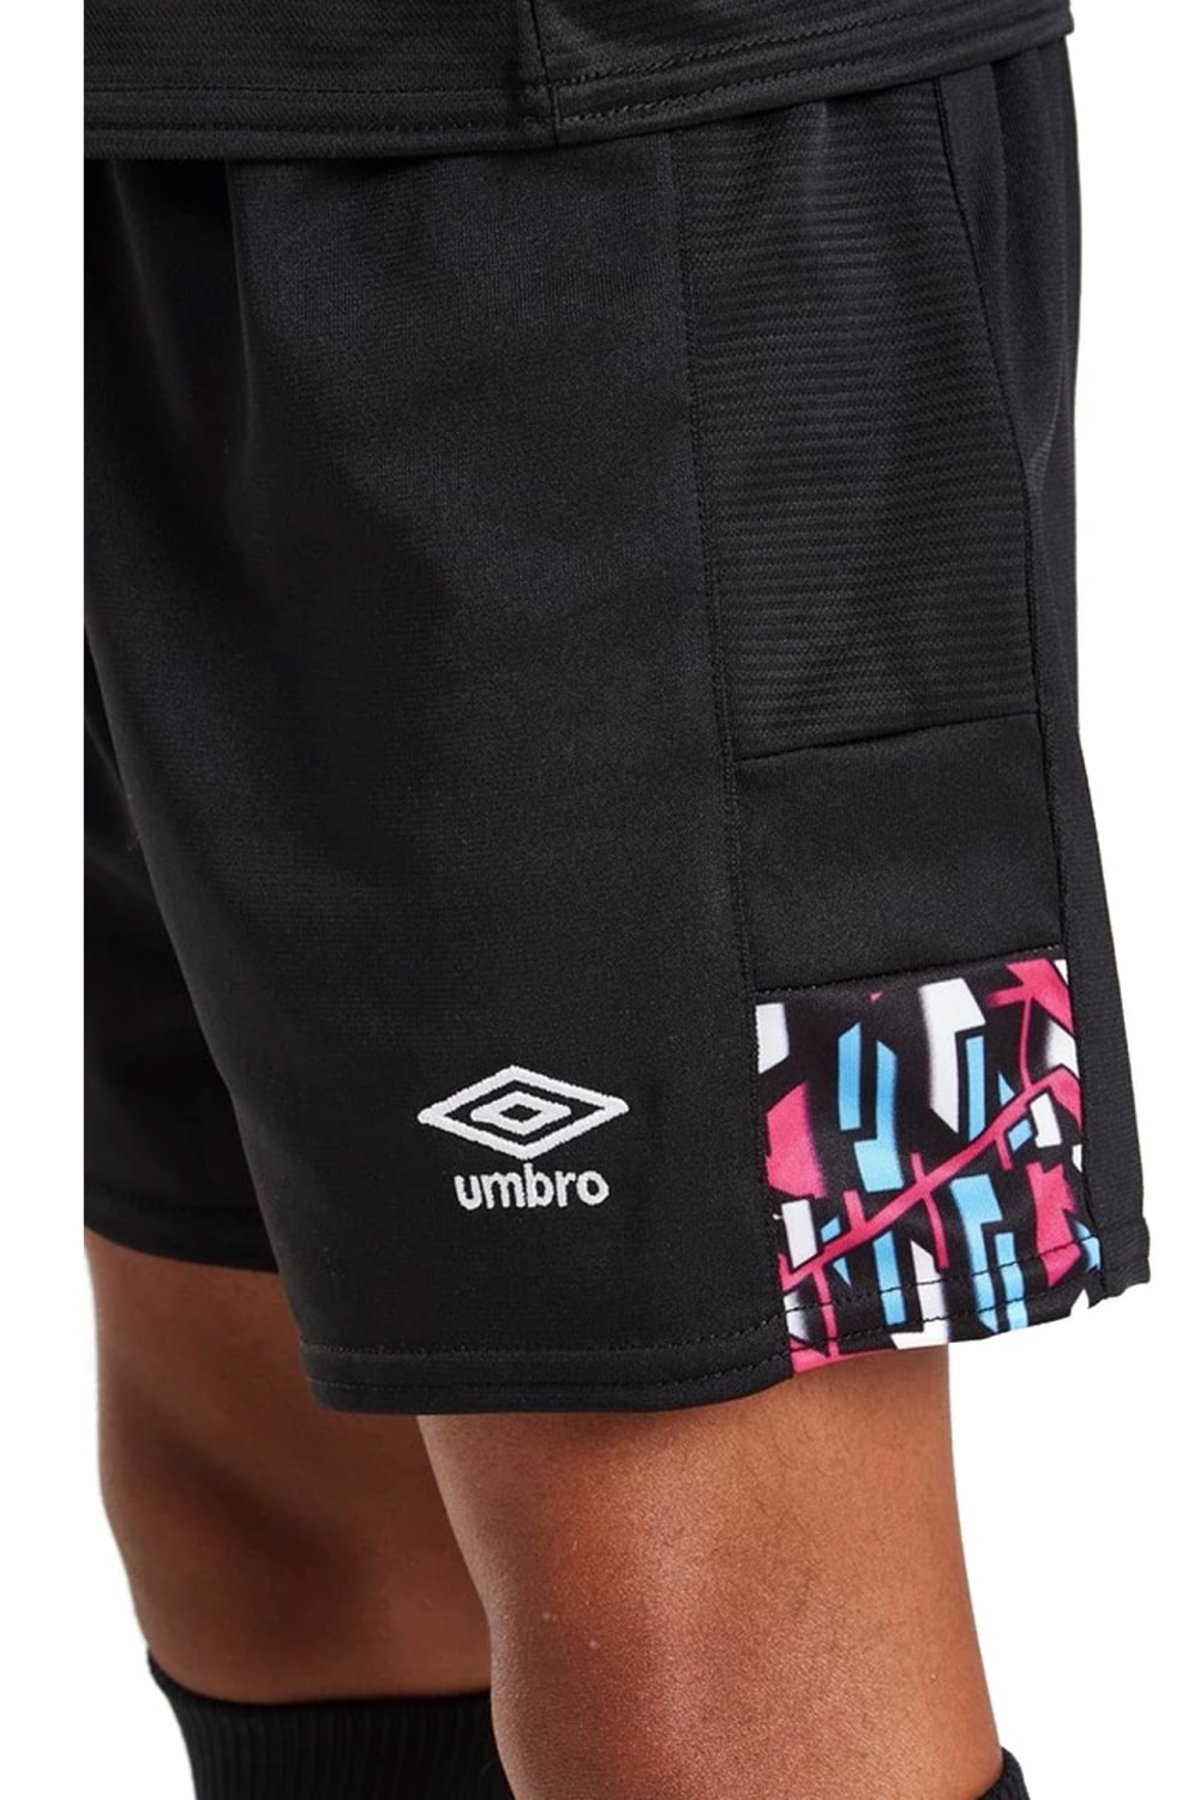 Fokken schrobben Kardinaal Umbro Black/Pink/Blue West Ham United FC Mens 22/23 Away Shorts -  Black/Pink/Blue | Verishop